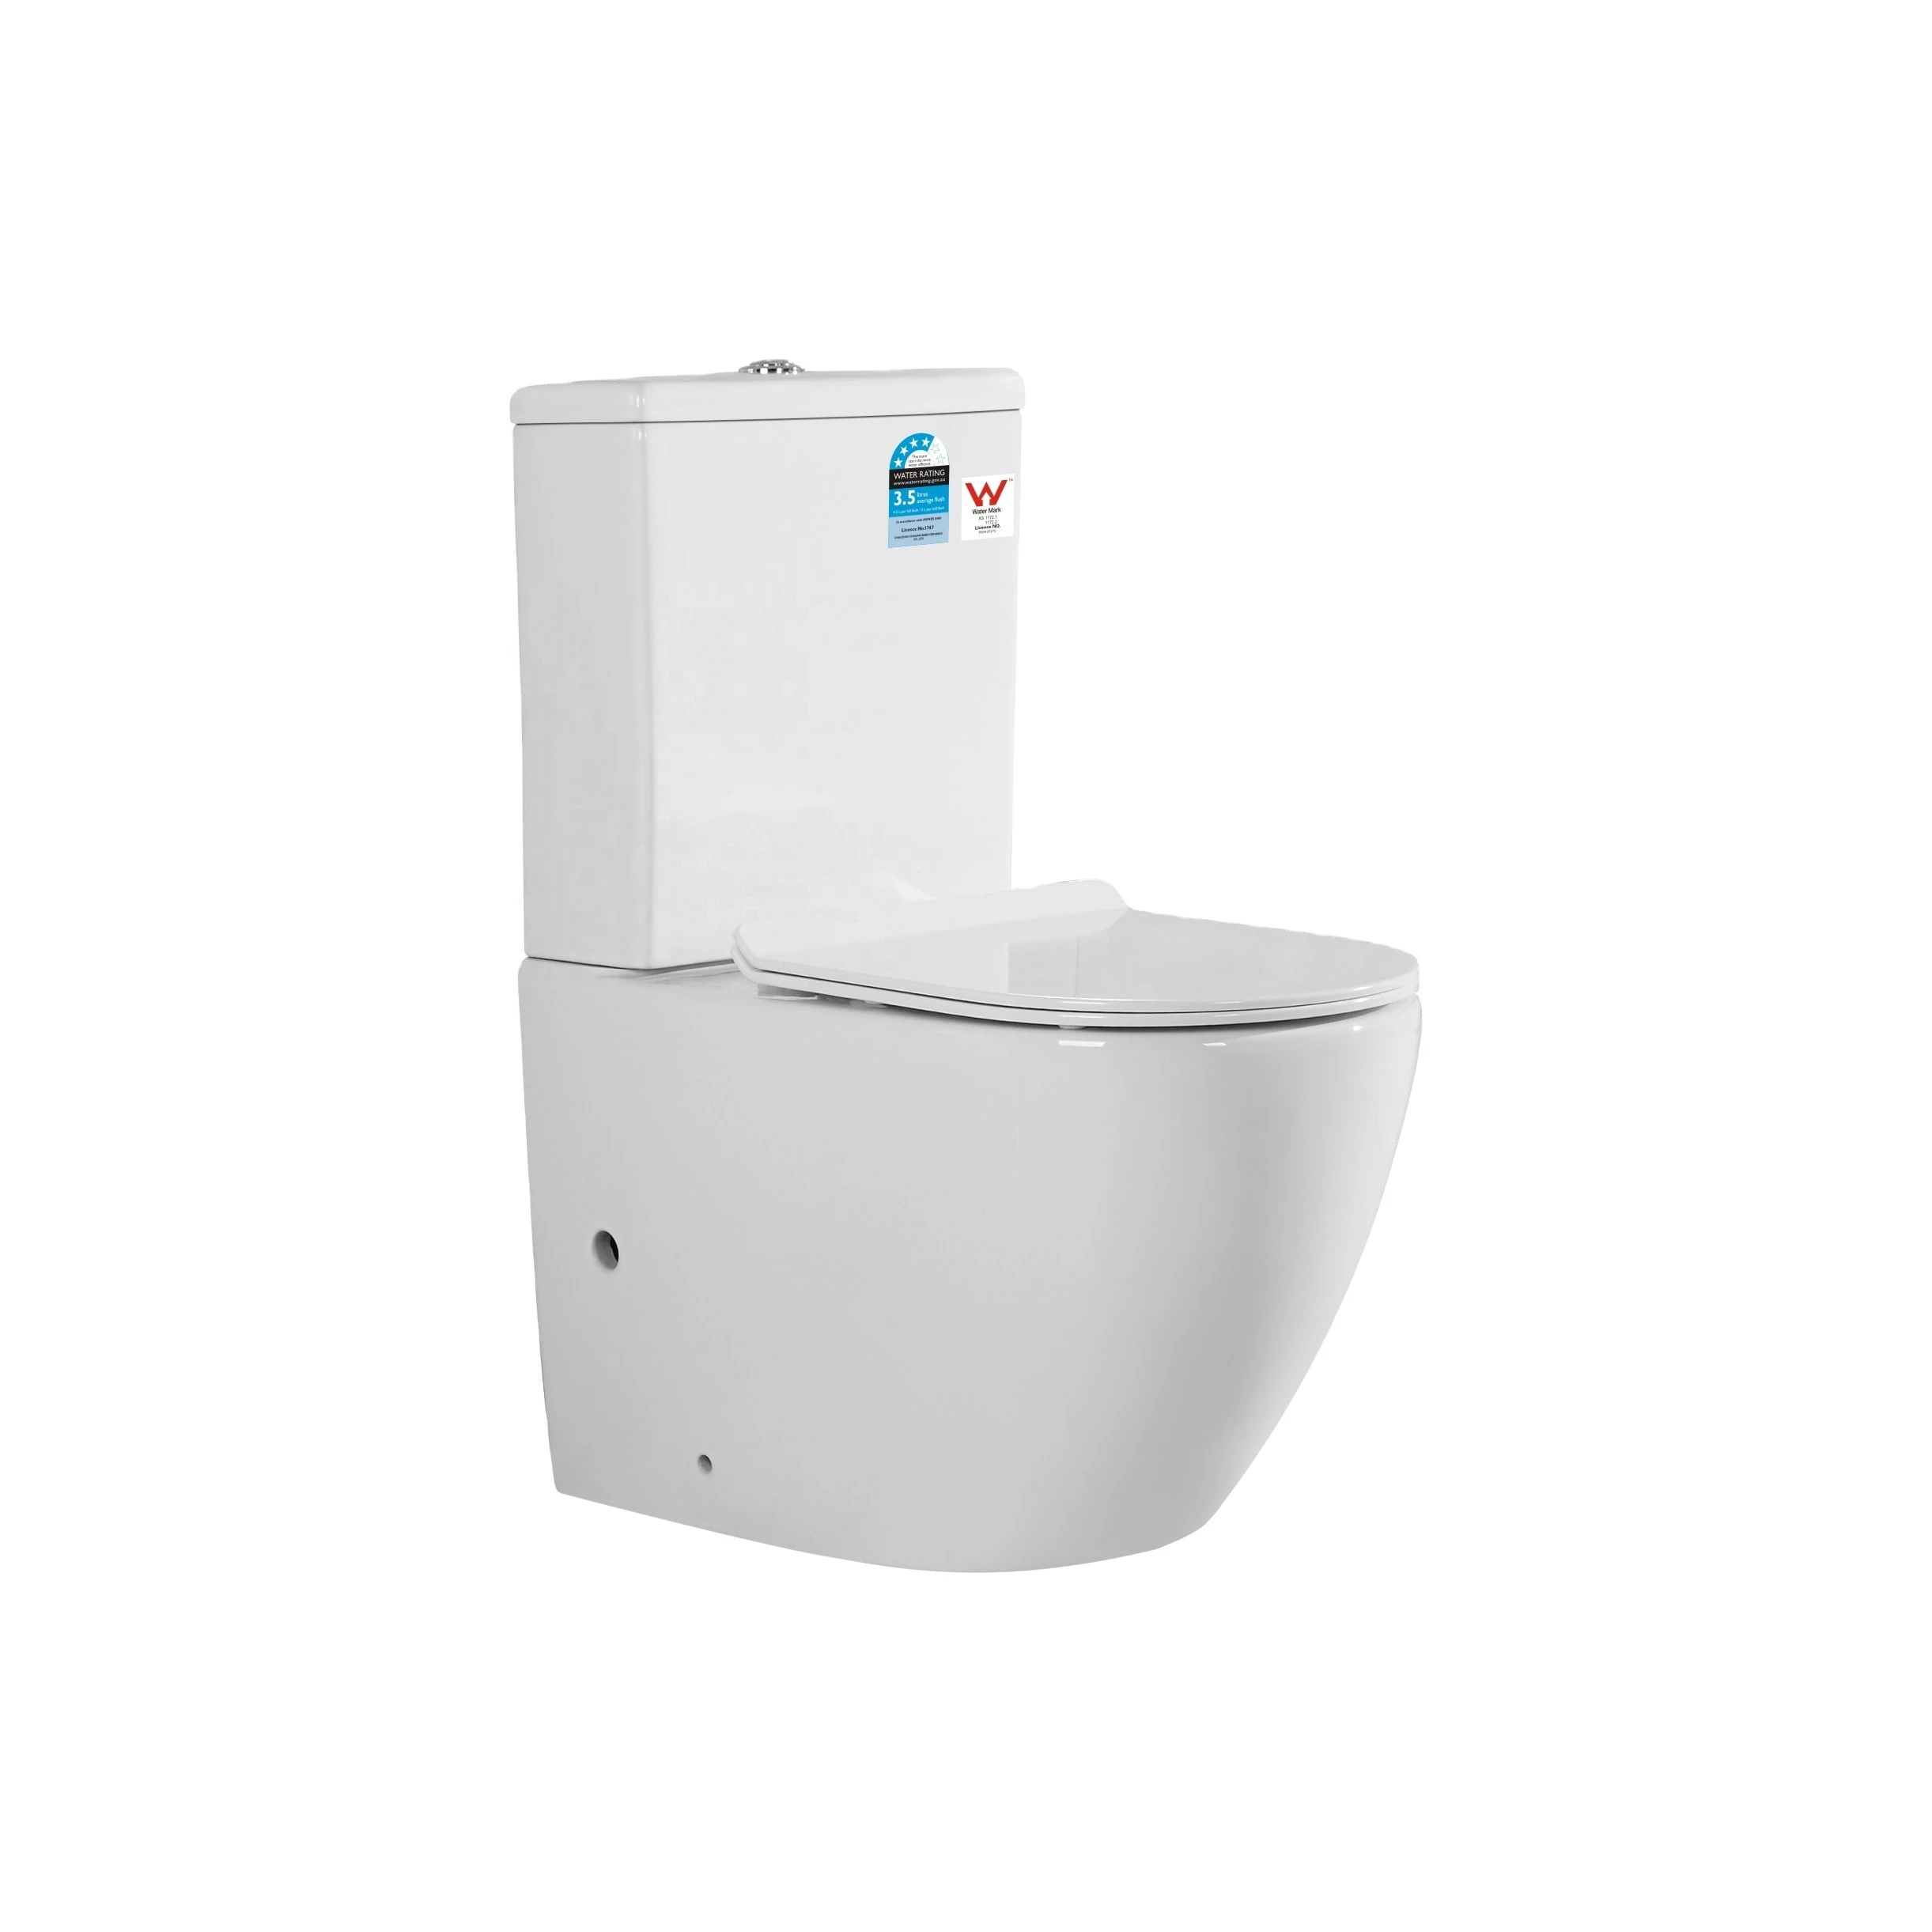 ZHONGYA Australia Watermark Two piece rimless flushing luxury sanitary ware wc commode ceramic toilet bowl